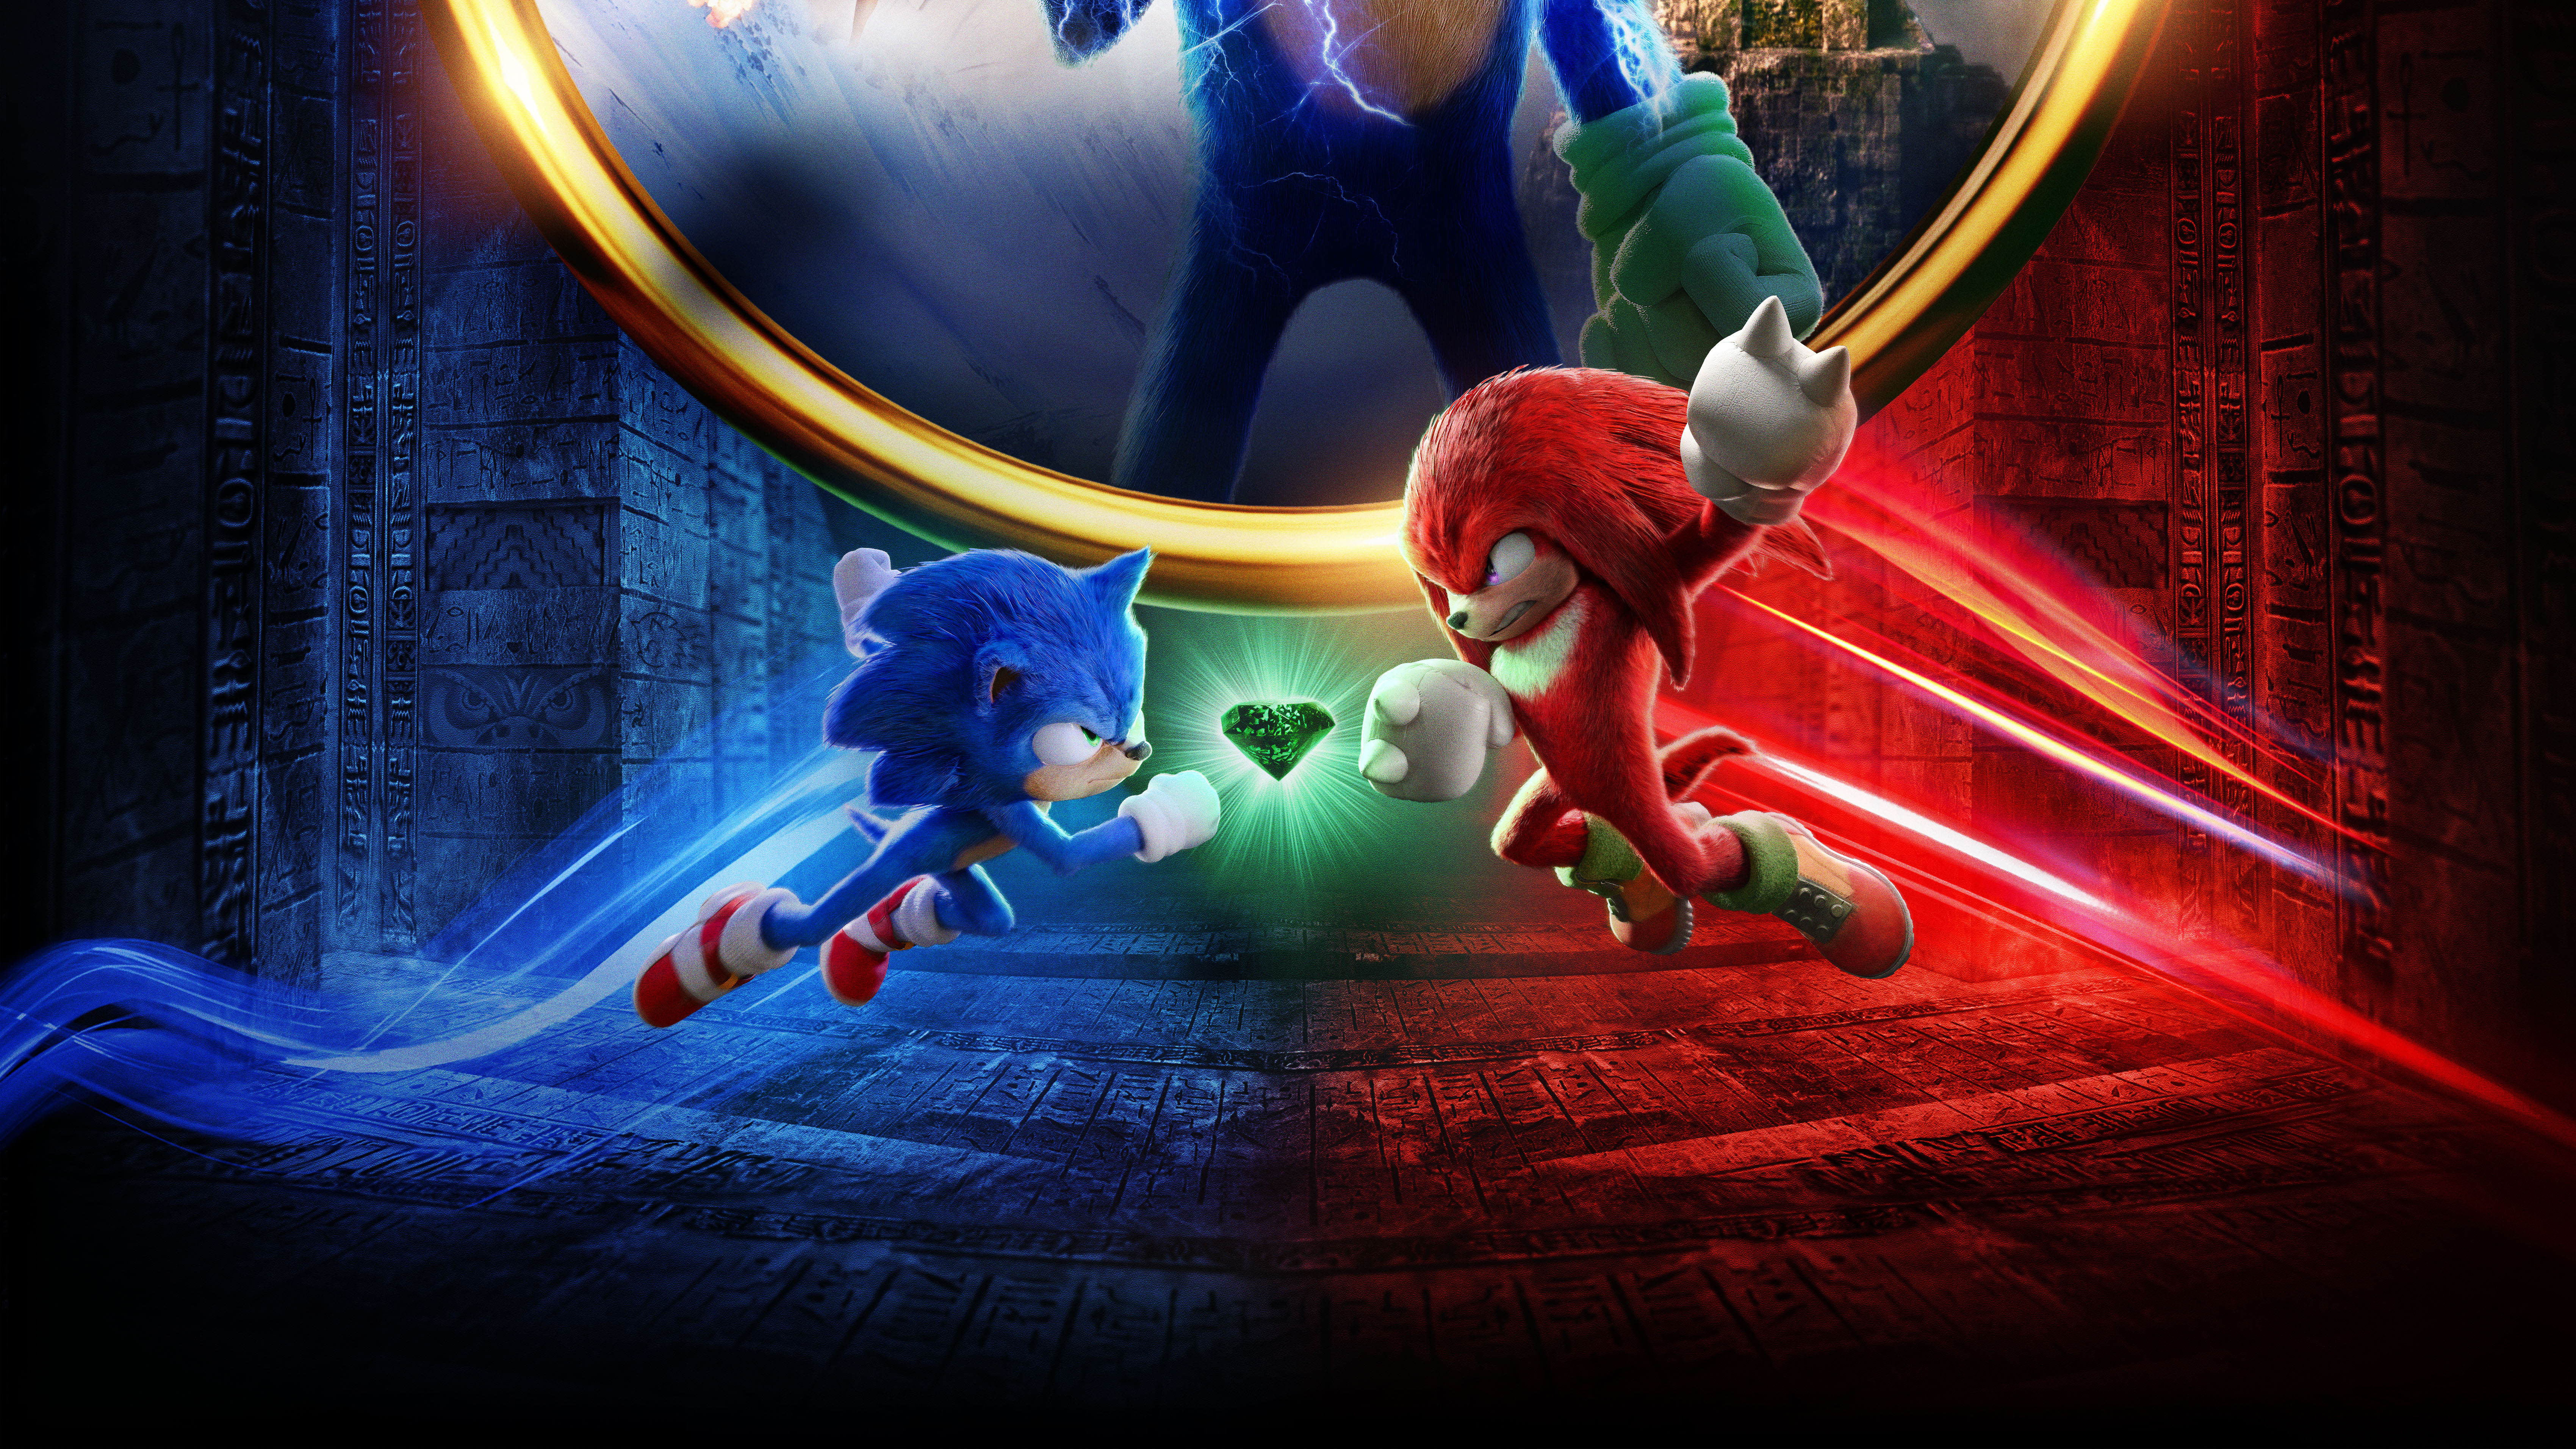 Sonic 1080P, 2K, 4K, 5K HD wallpapers free download